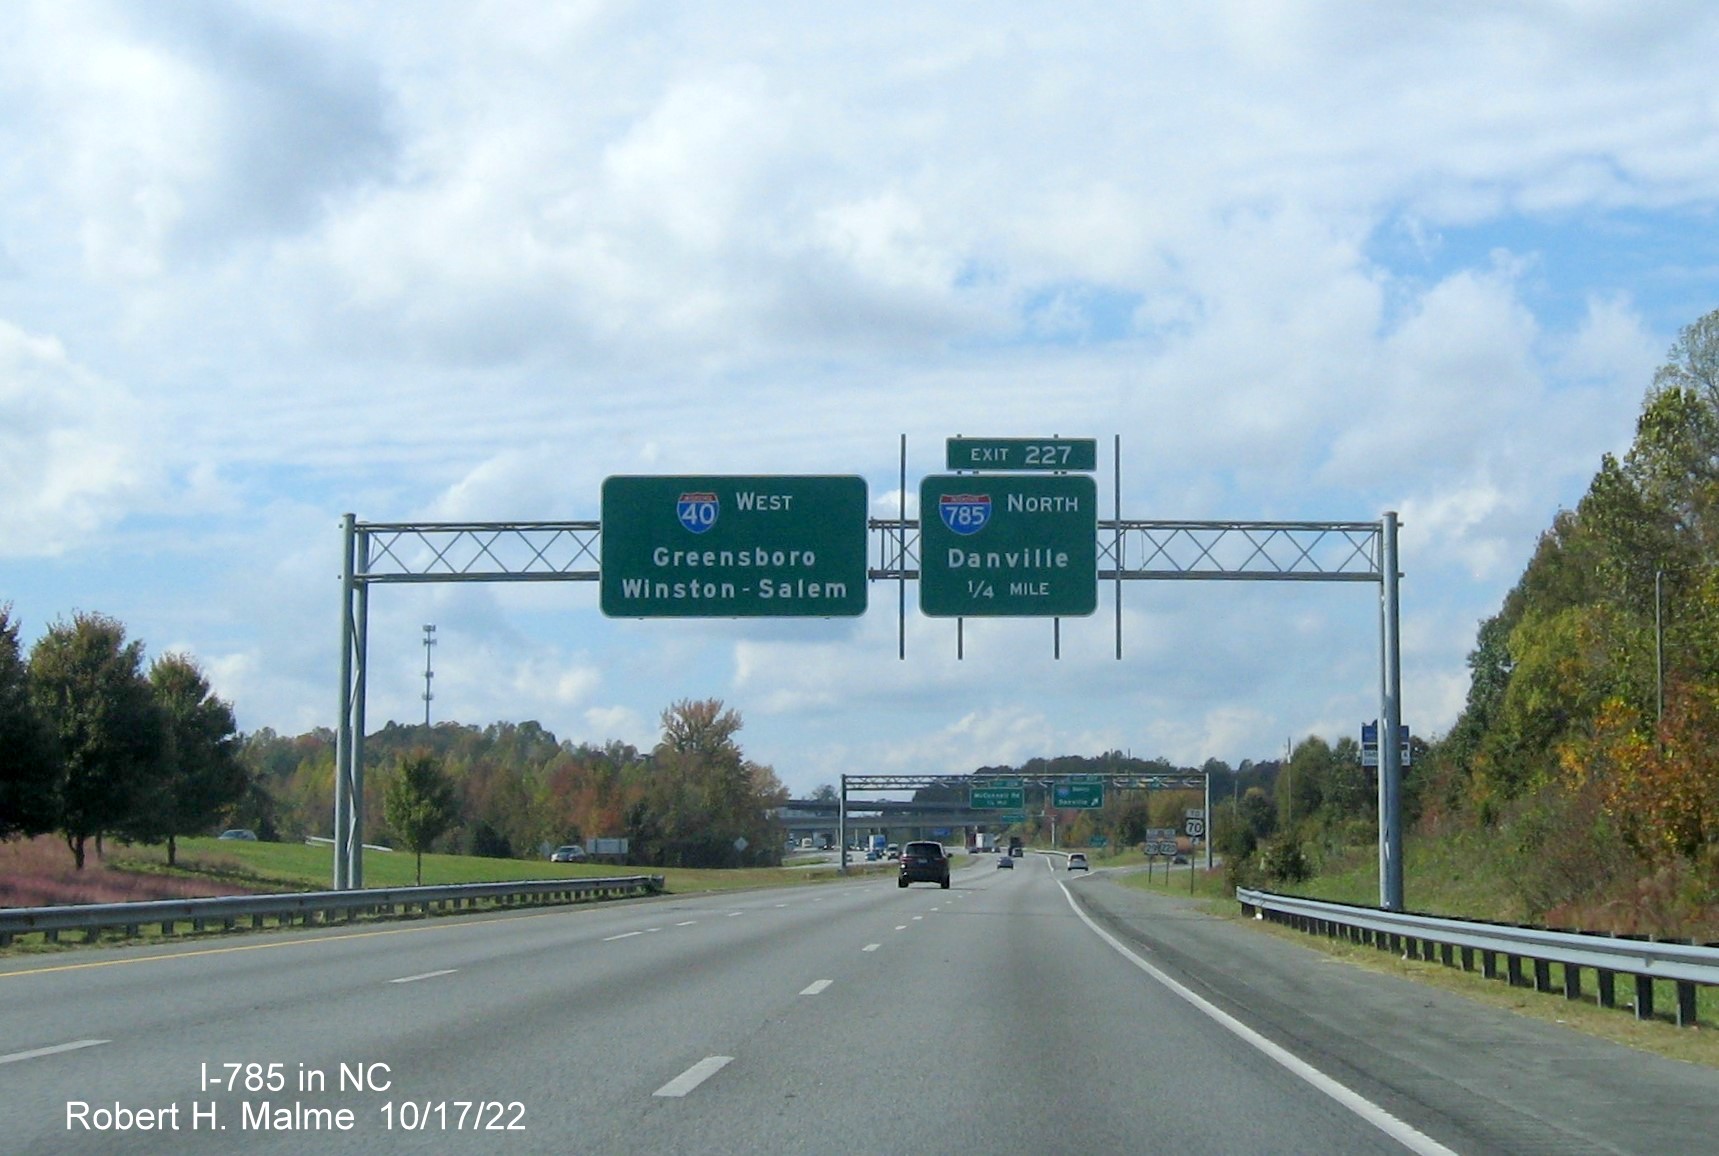 Image of I-785 North ramp sign at on I-40 West at Greensboro Urban Loop, October 2022